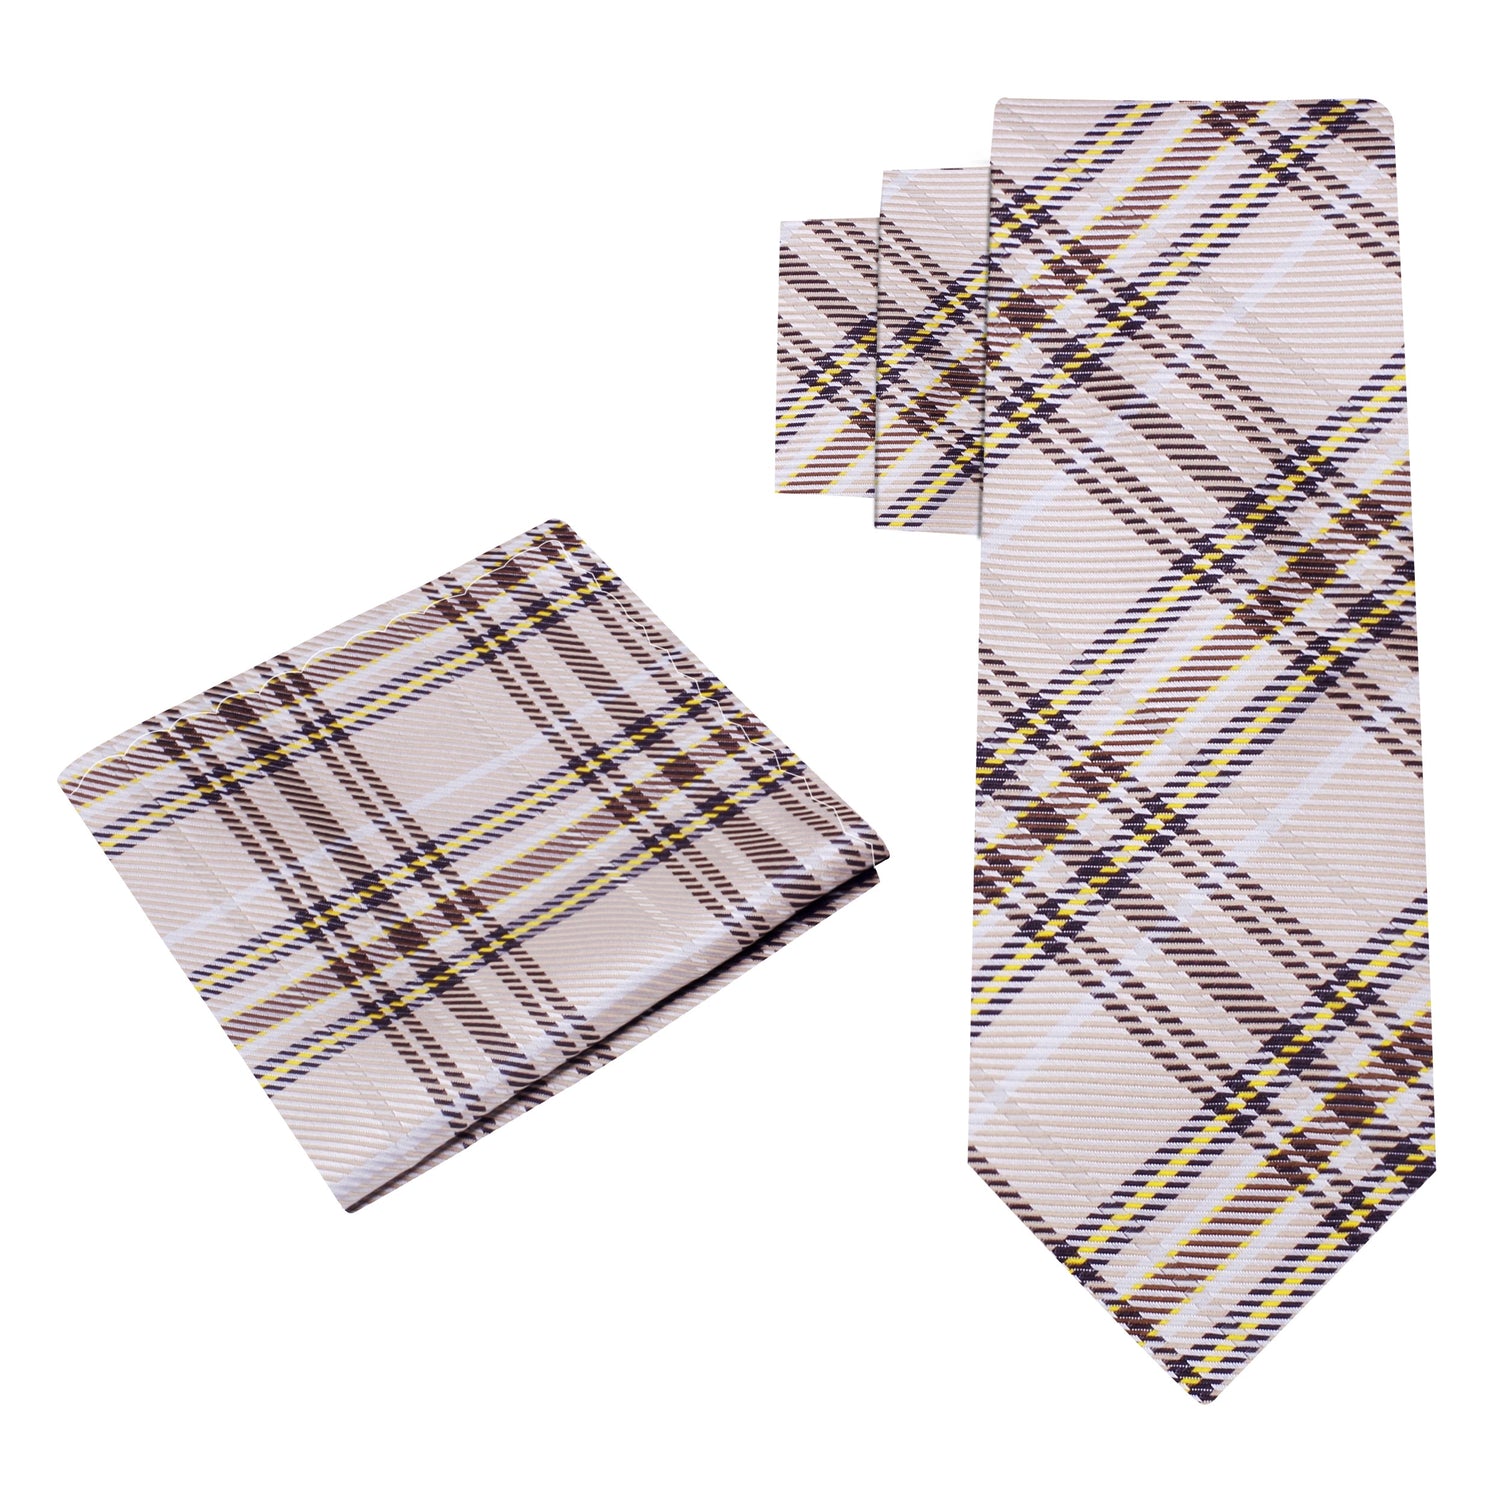 Alt View: A Brown, Tan, Cream Plaid Pattern Silk Necktie, Matching Pocket Square